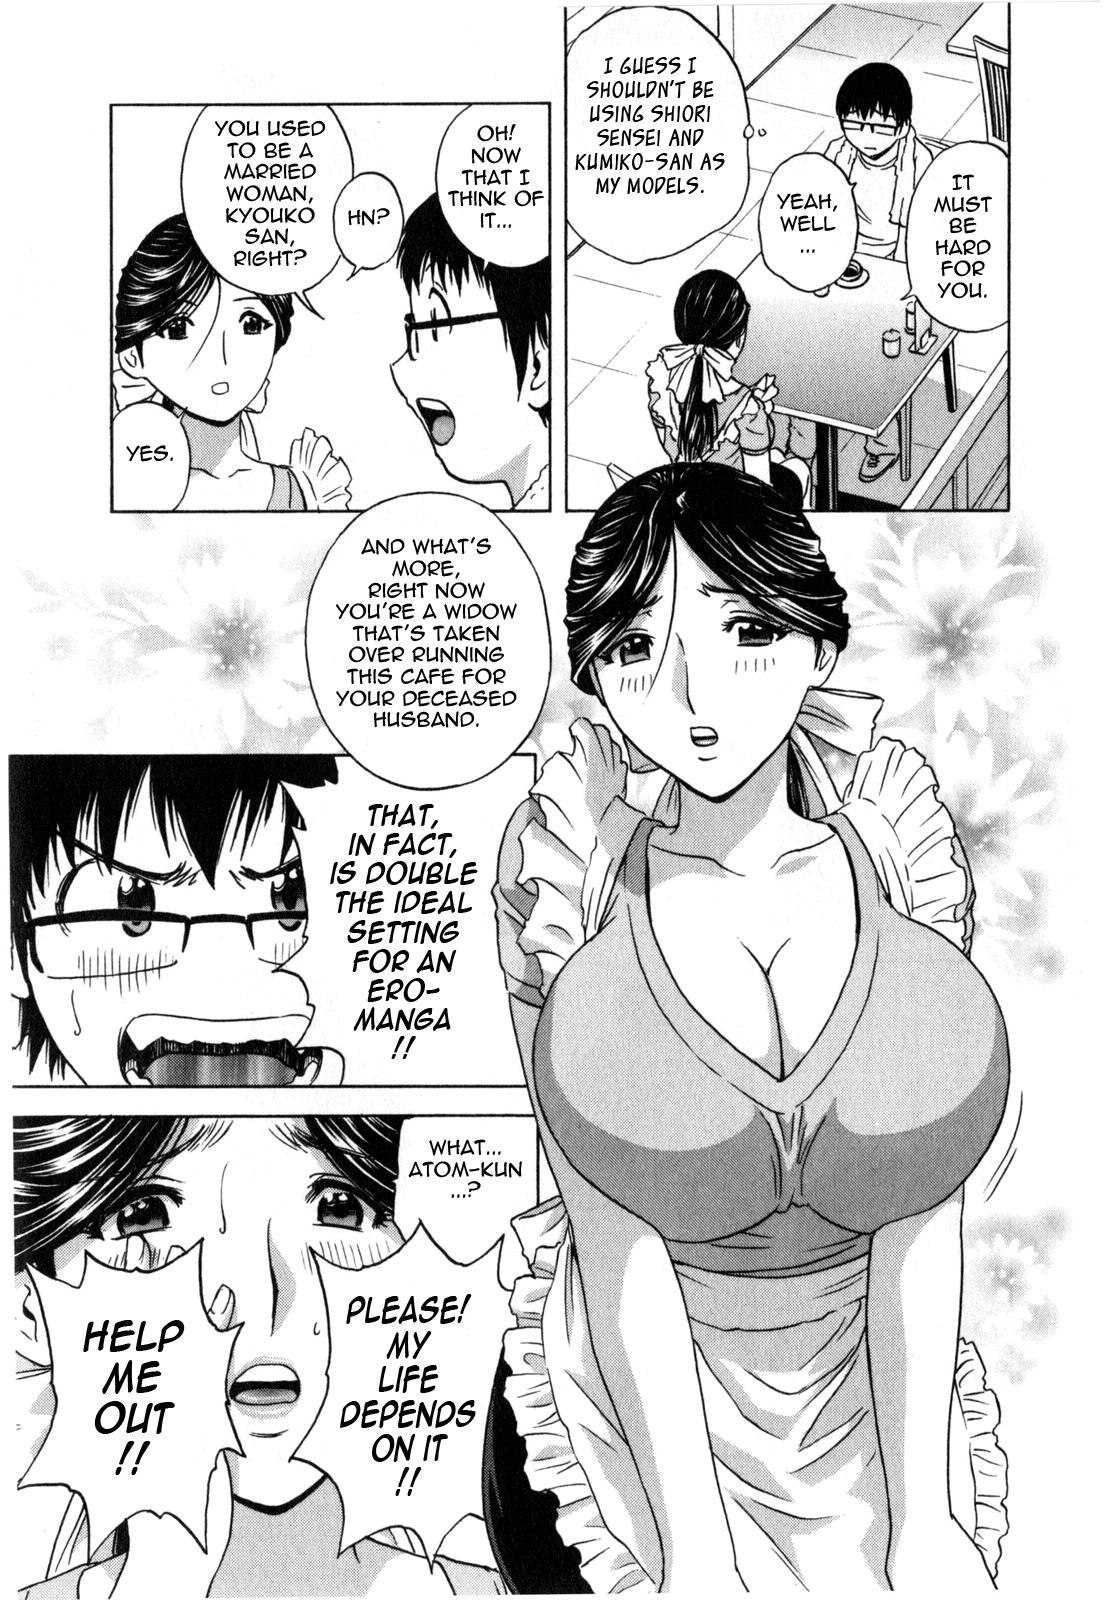 [Hidemaru] Life with Married Women Just Like a Manga 1 - Ch. 1-9 [English] {Tadanohito} 72